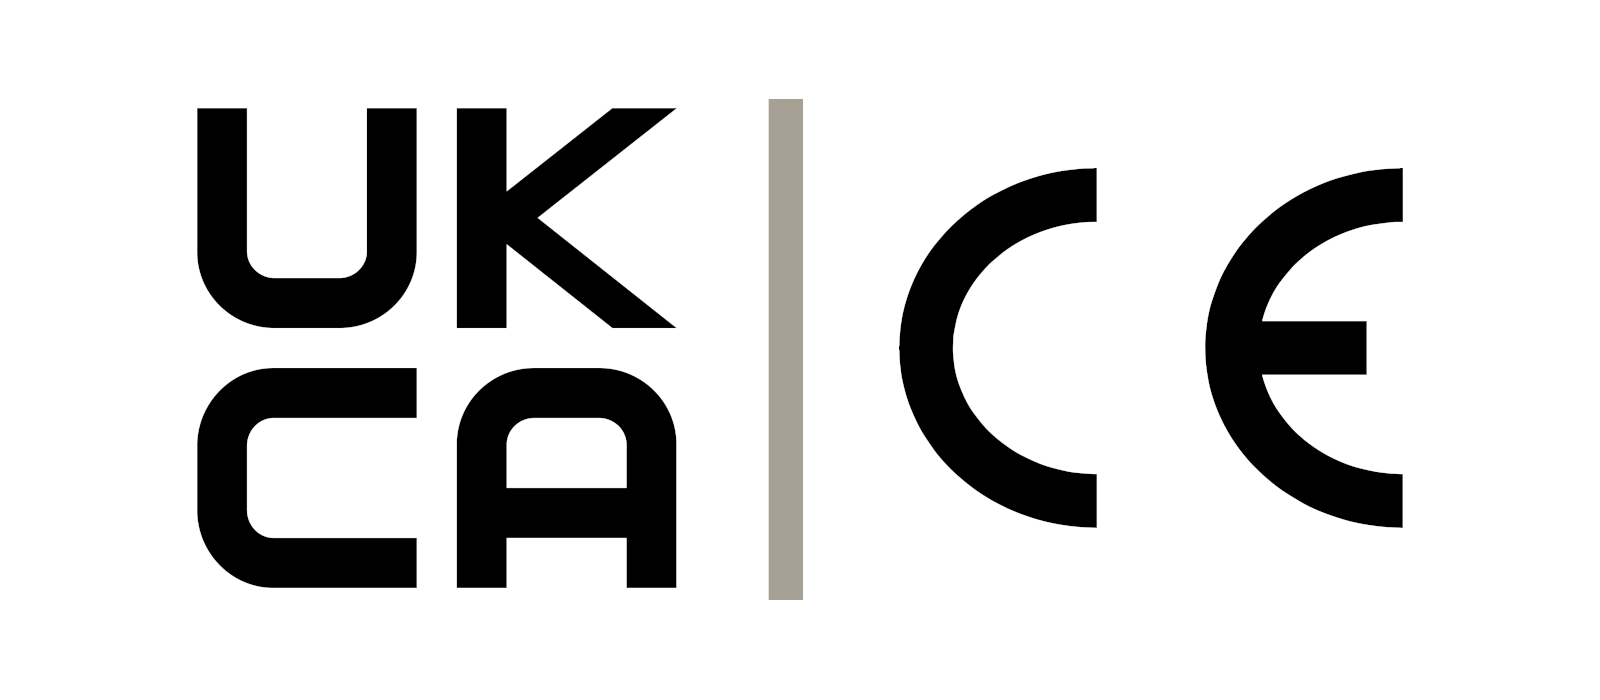 UKCA Certificates available